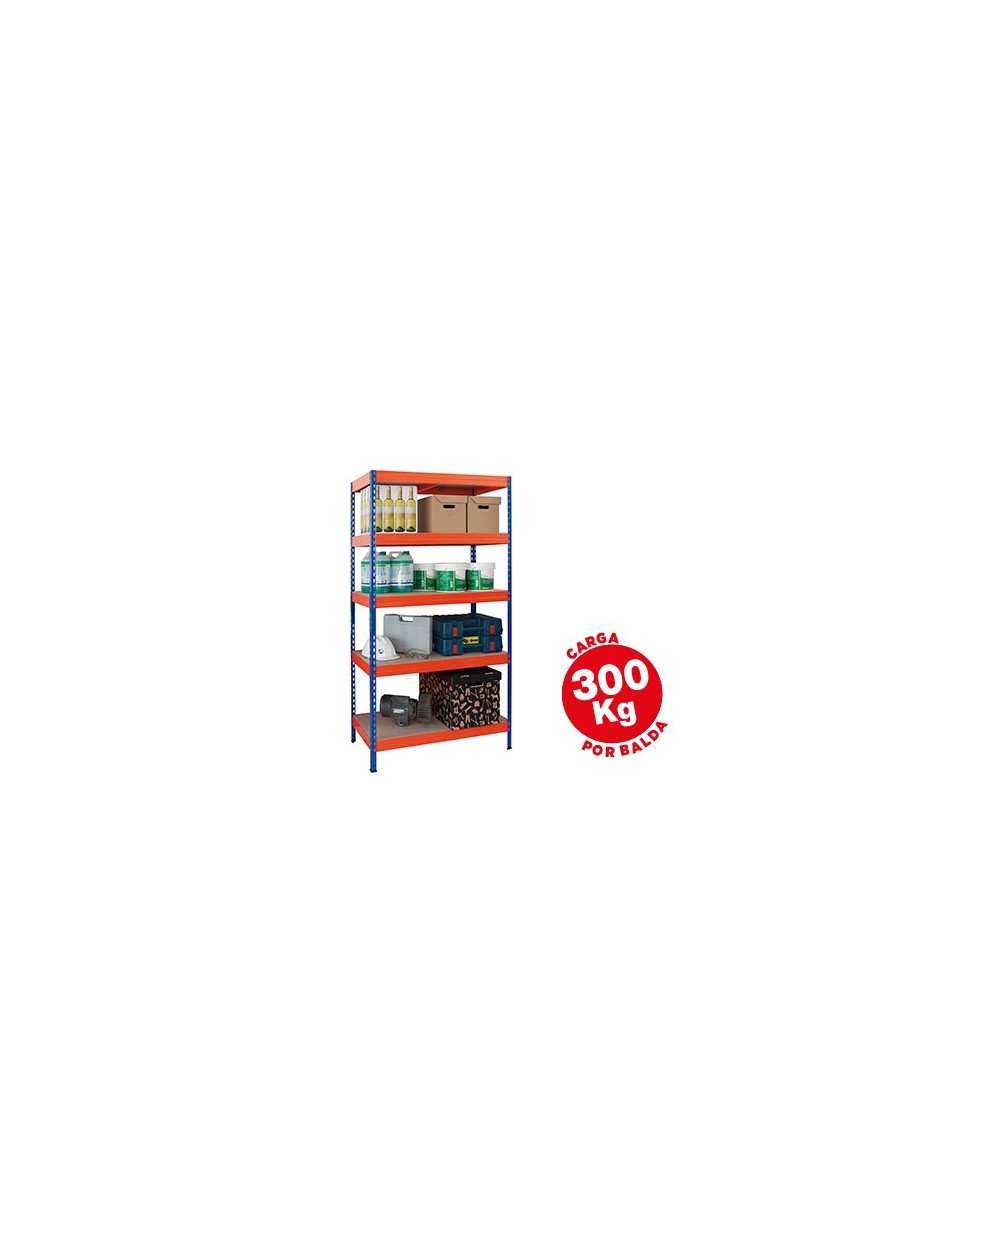 Estanteria metalica ar storage 192x100x50cm 5 estantes 300kg por estante bandejas de maderasin tornillos azul naranja